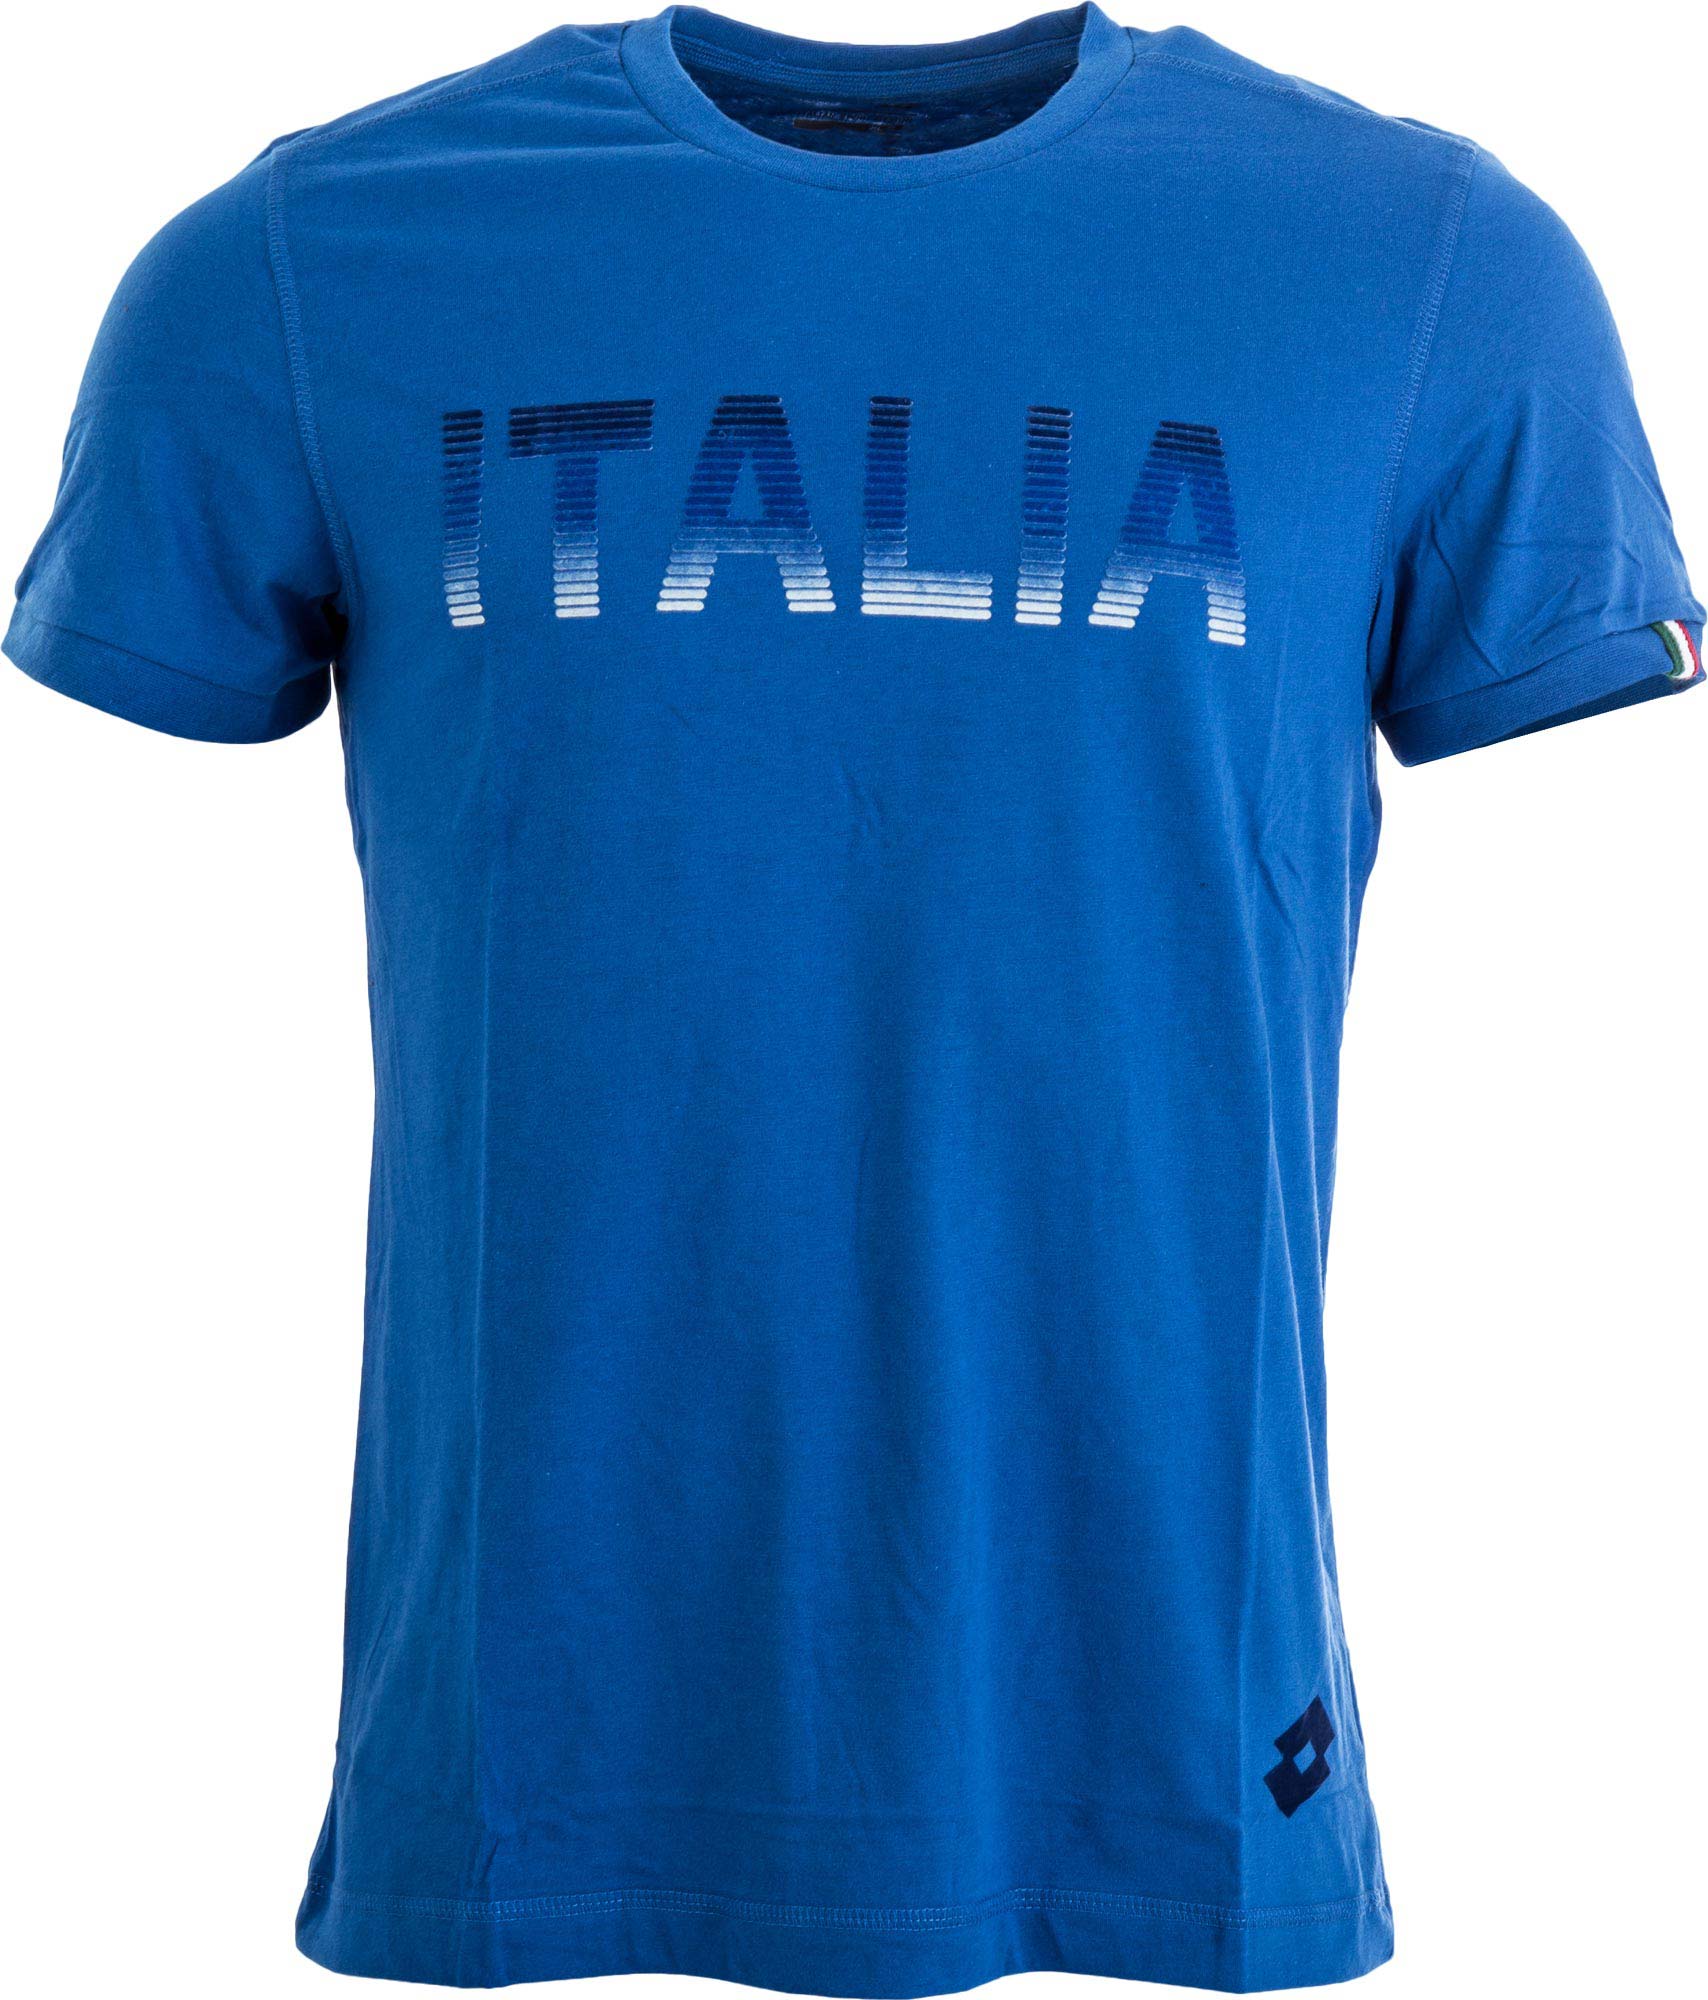 T-SHIRT TEAMCUP ITA LINE - Pánske tričko